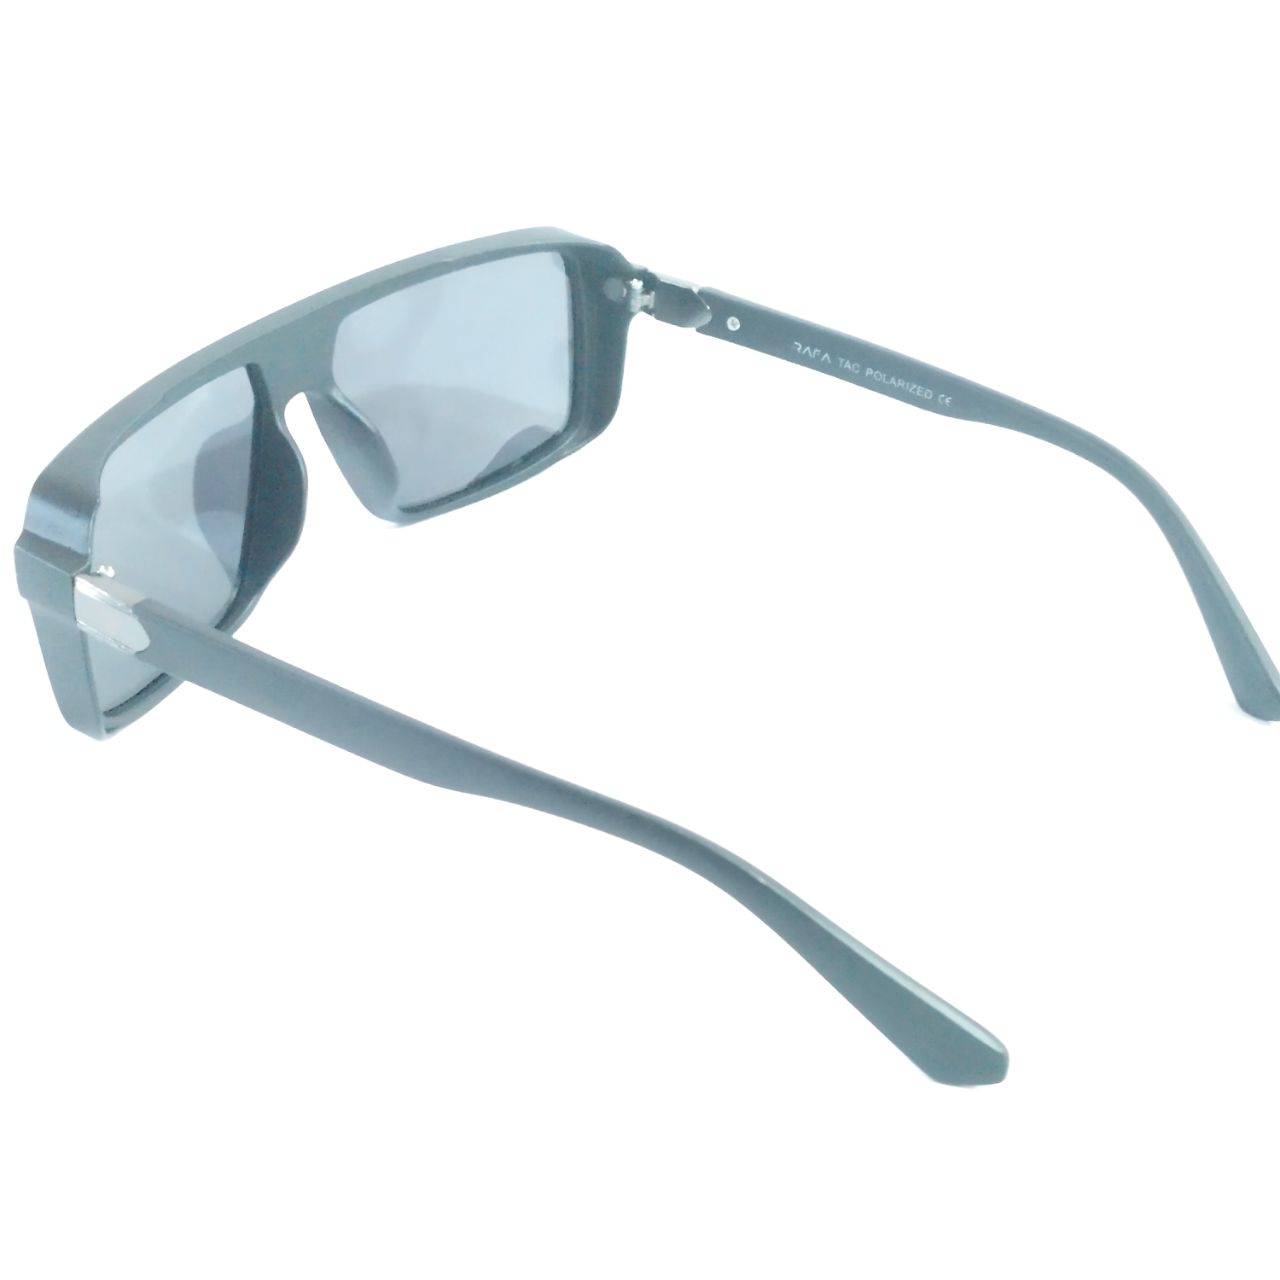 Black Polarized Sunglasses for Men and Women